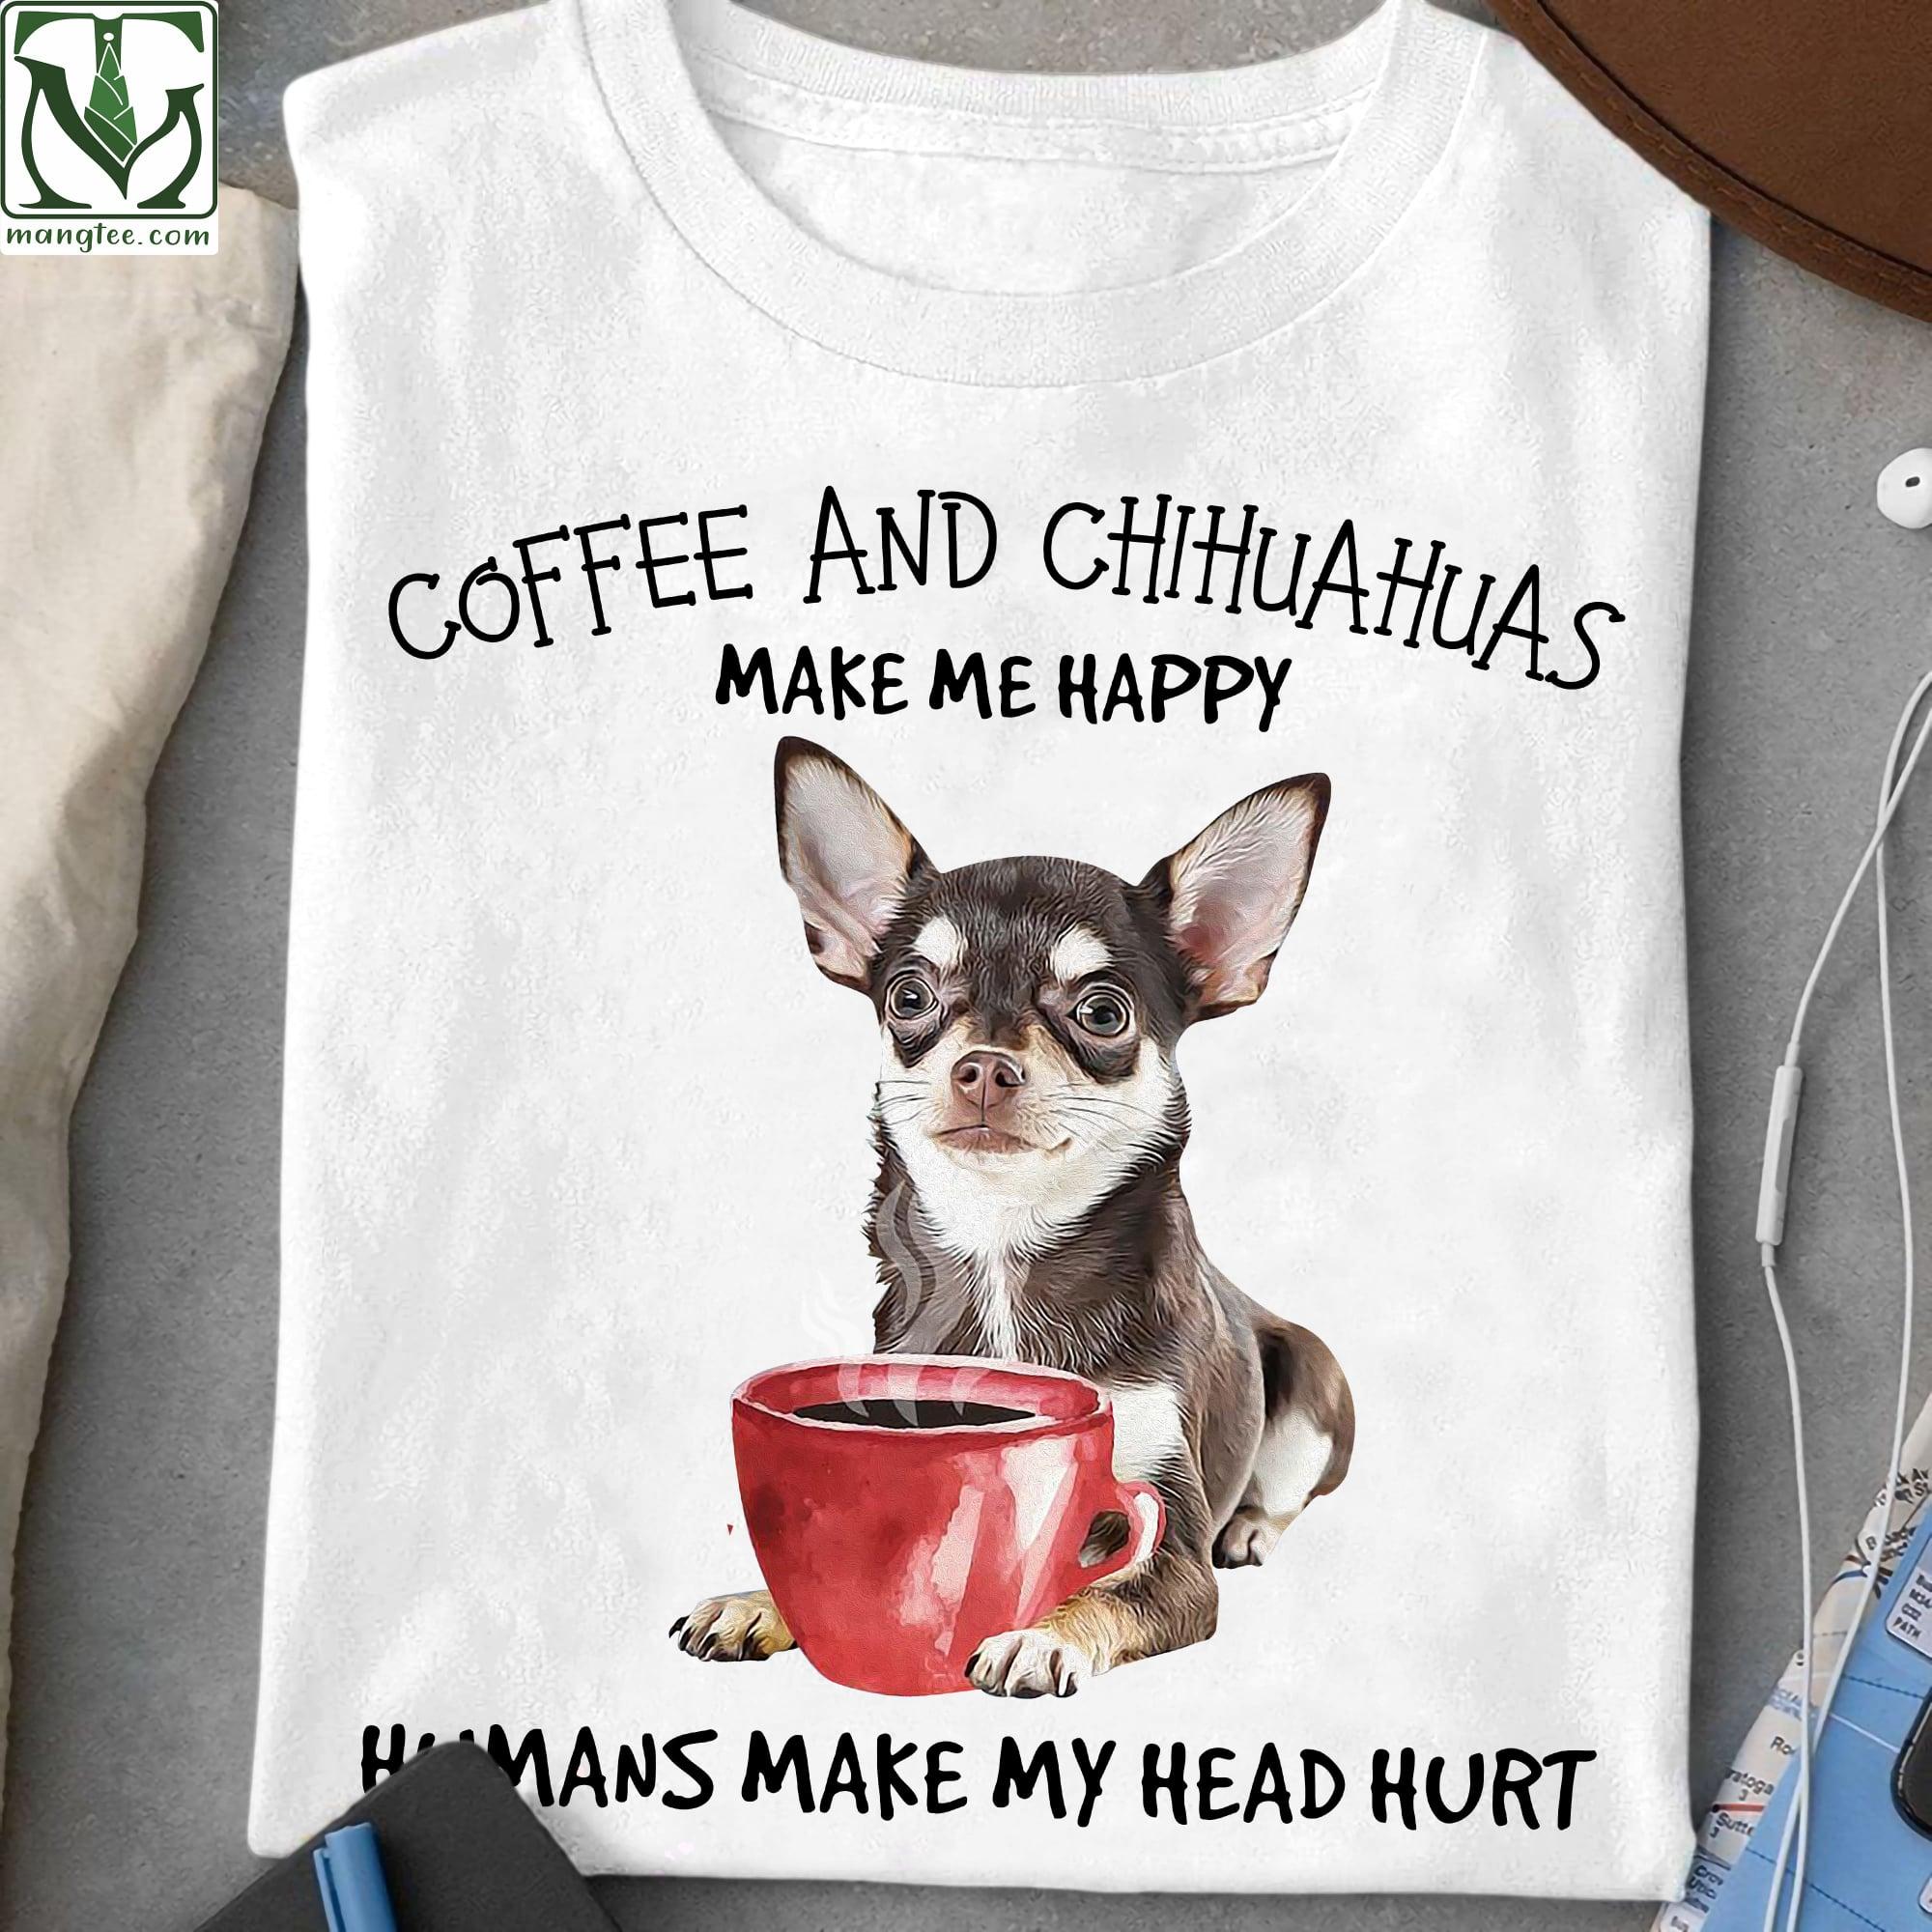 Coffee and Chihuahuas make me happy, humans make my head hurt - Dog and coffee, Chihuahua dog lover